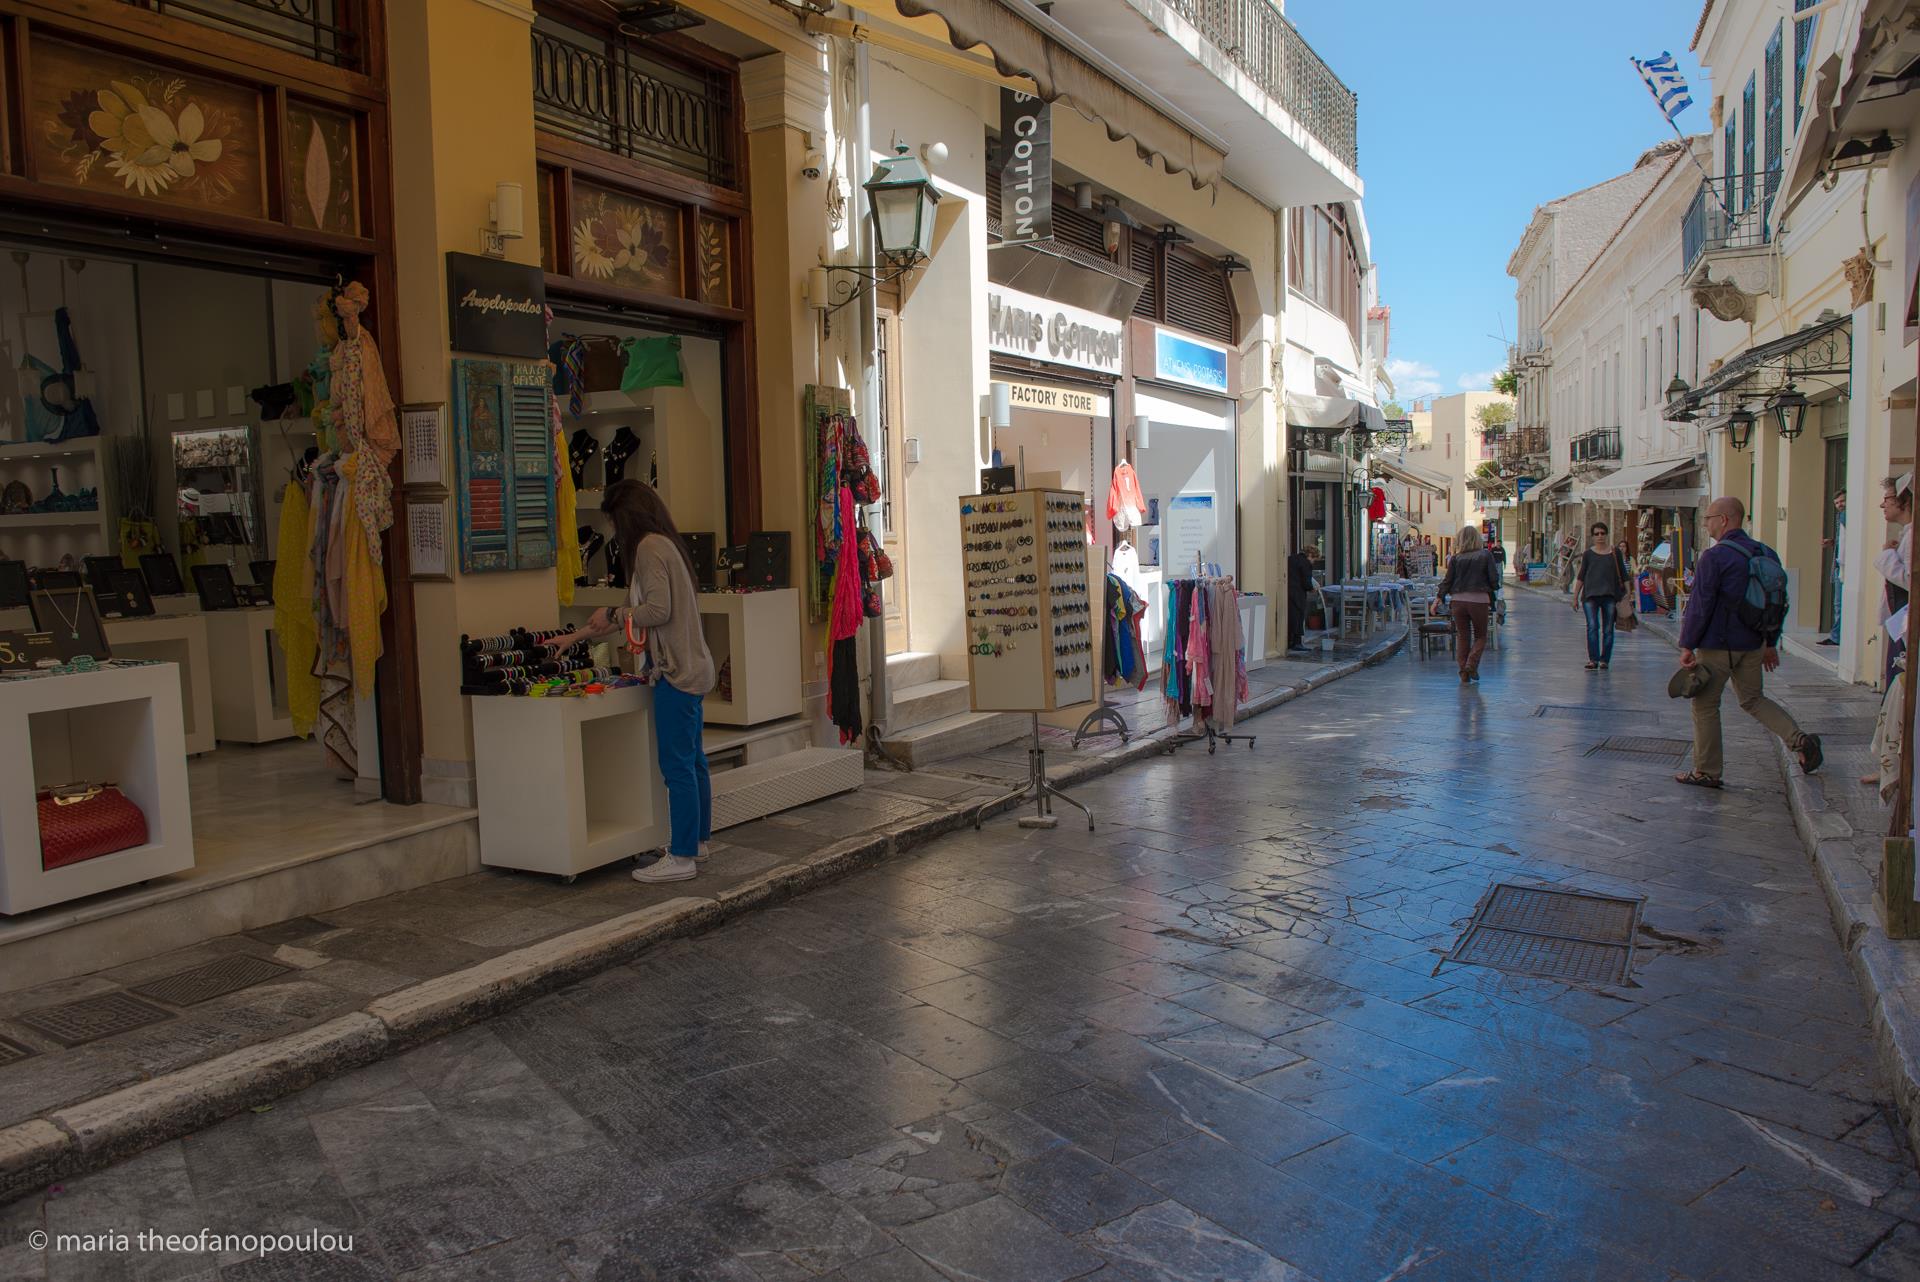 Andrianou Street in Plaka PLAKA (City quarter) ATHENS